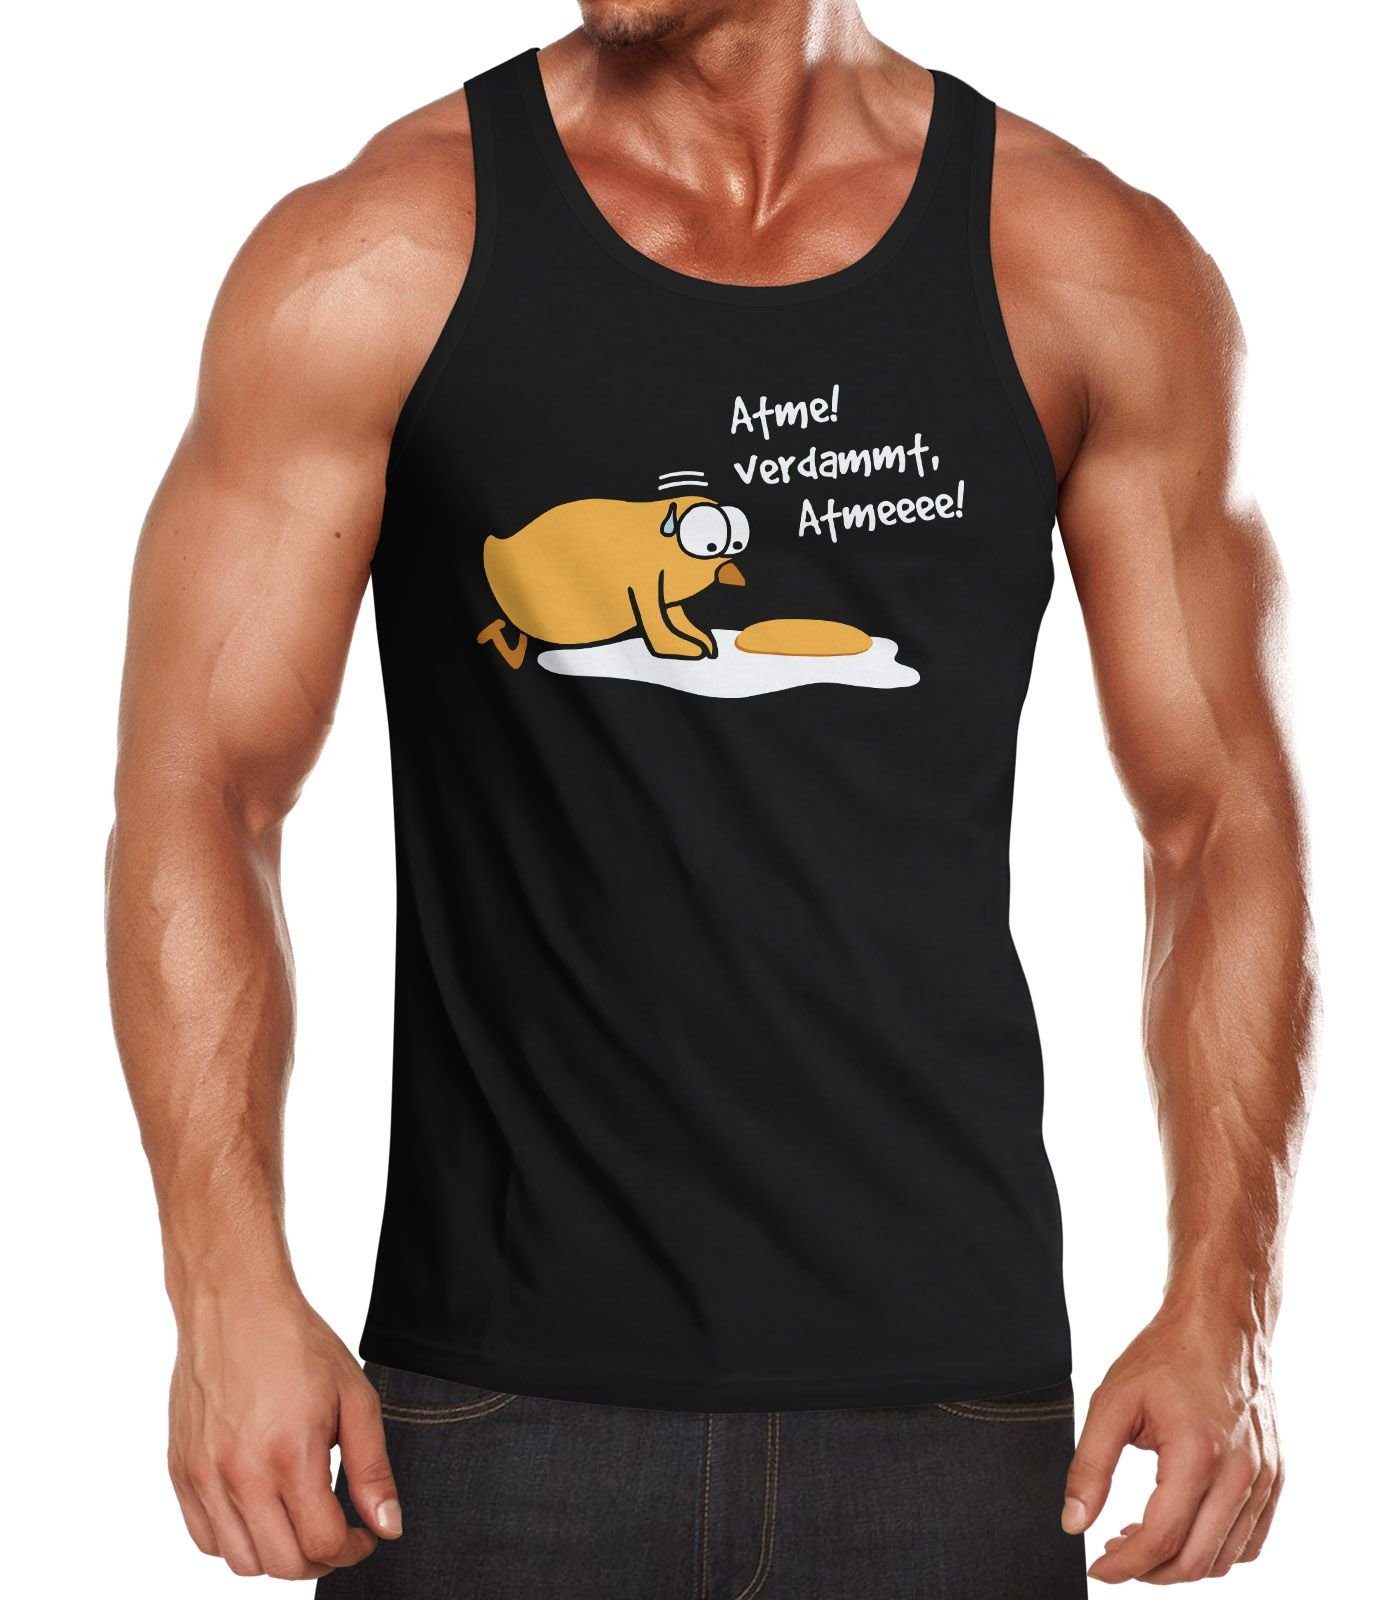 MoonWorks Tanktop Herren Tanktop Spiegelei Spruch Atme! Verdammt Küken Funshirt Muscle Shirt Achselshirt Moonworks® mit Print